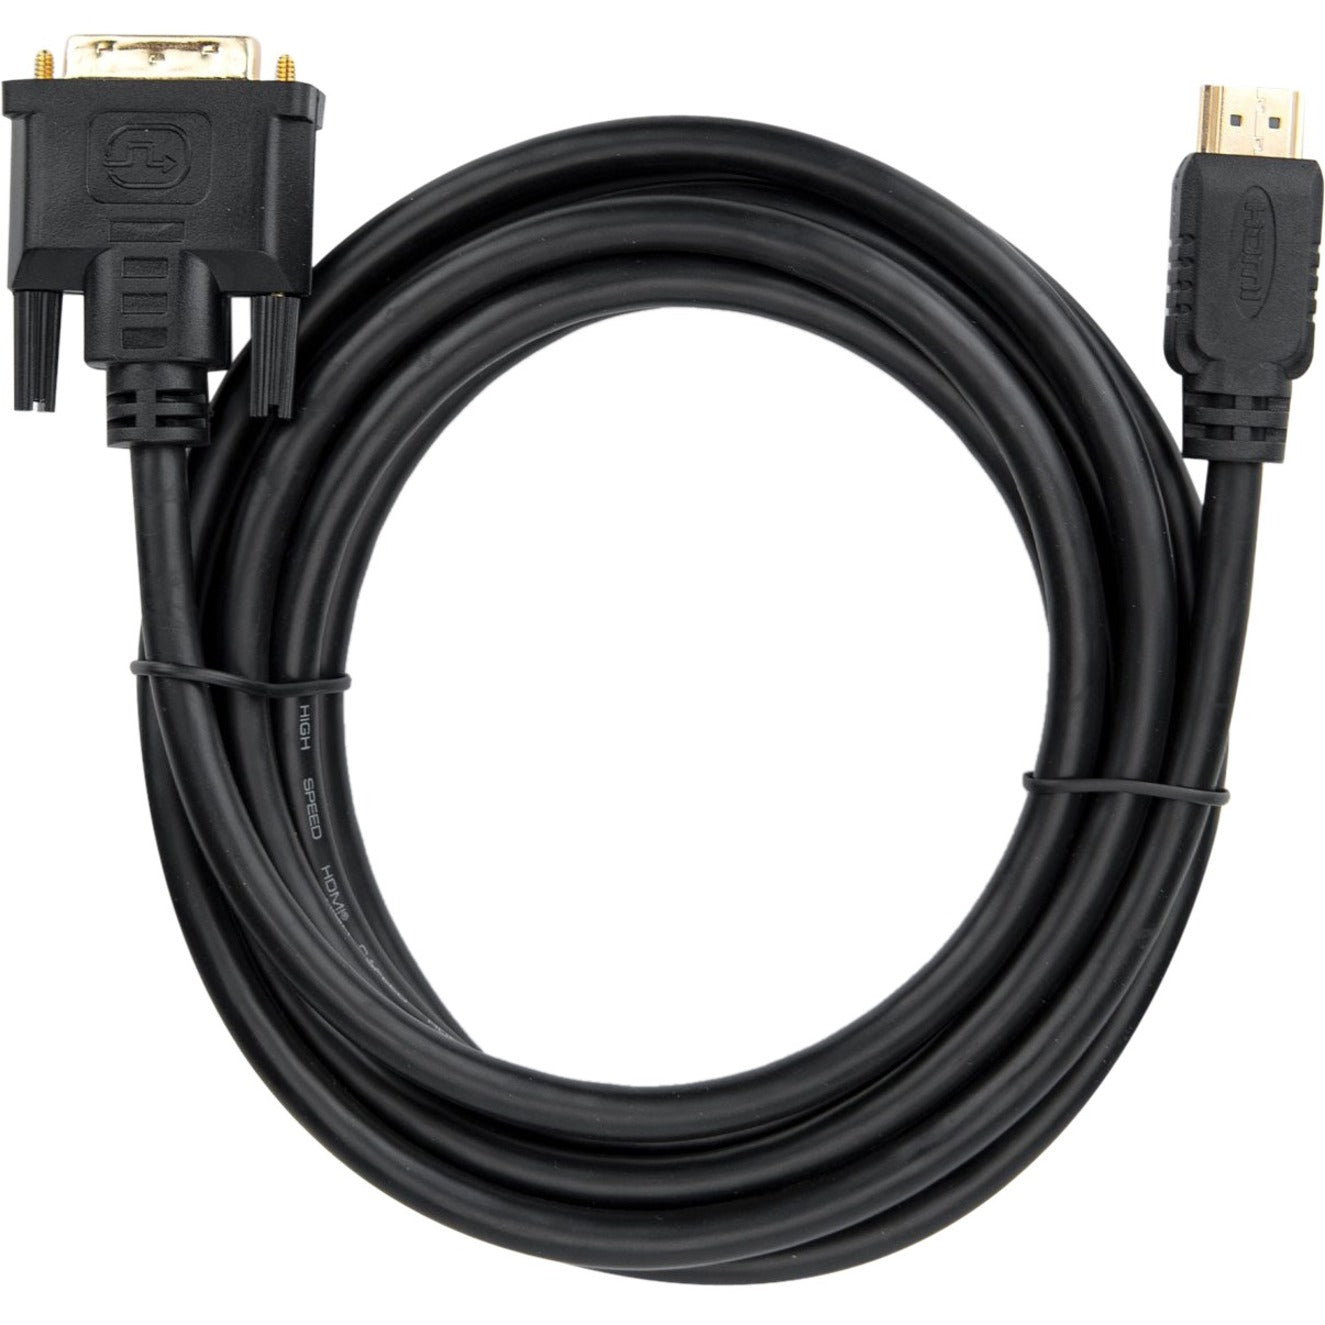 Rocstor Y10C125-B1 Premium HDMI to DVI-D Cable, 10ft - High-Quality Video Connection